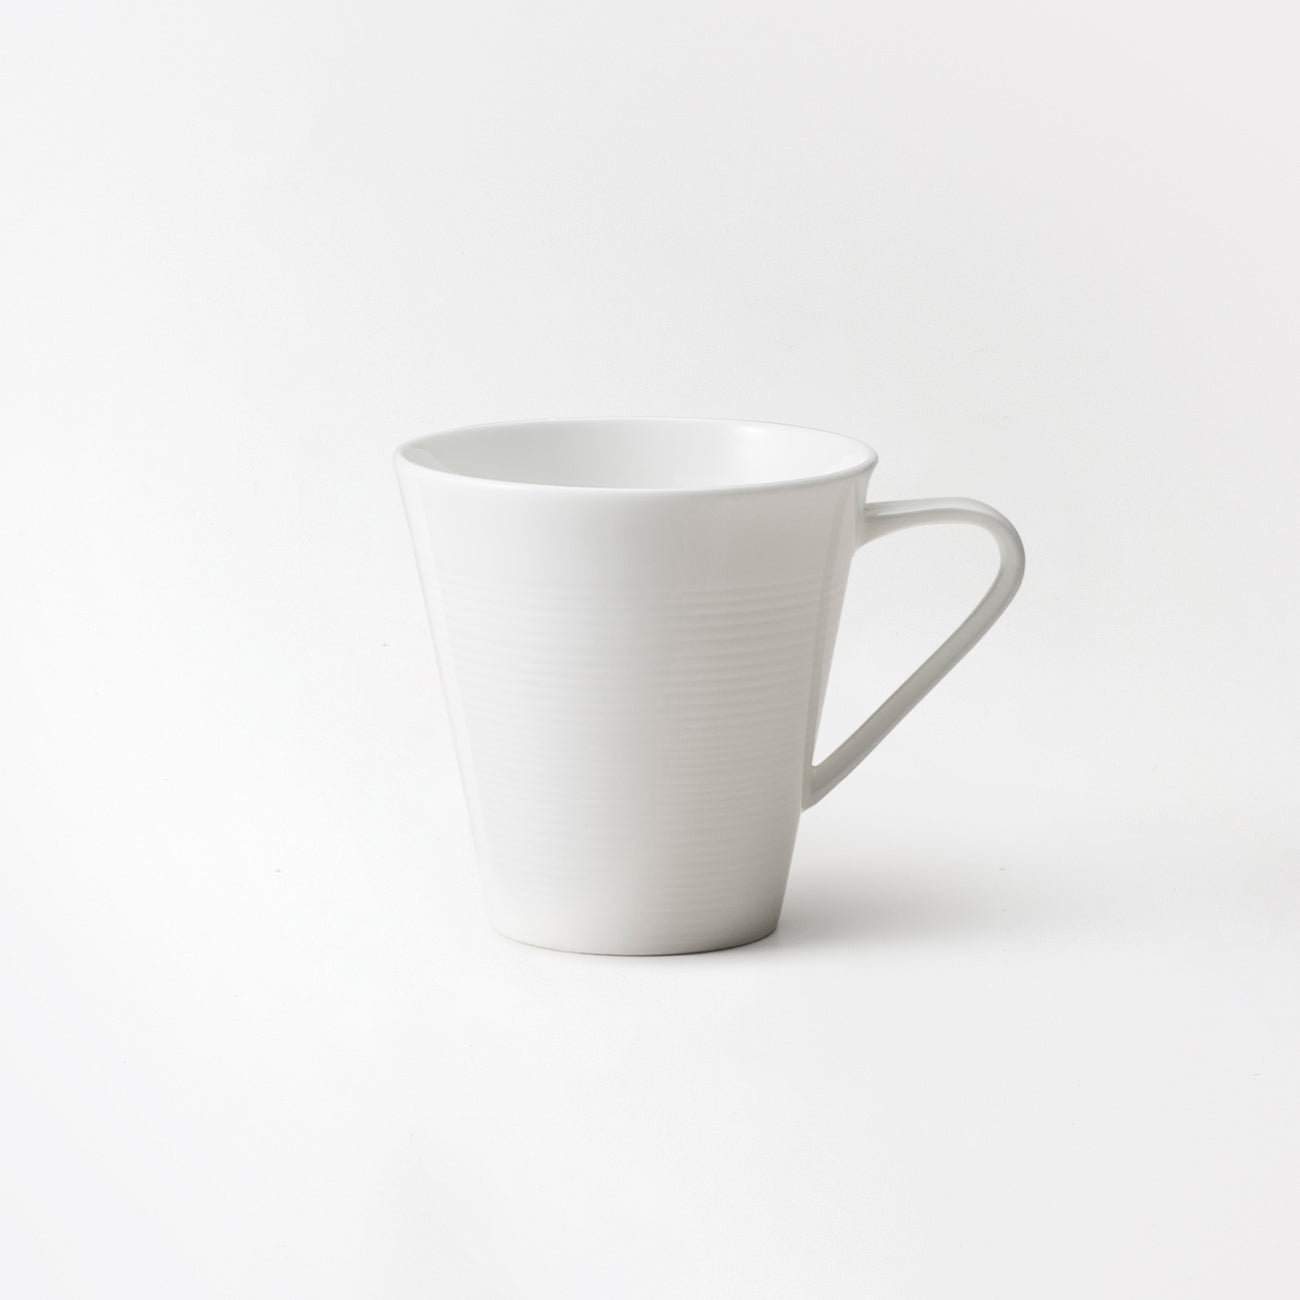 【復興支援商品】コーヒー碗 (190cc)